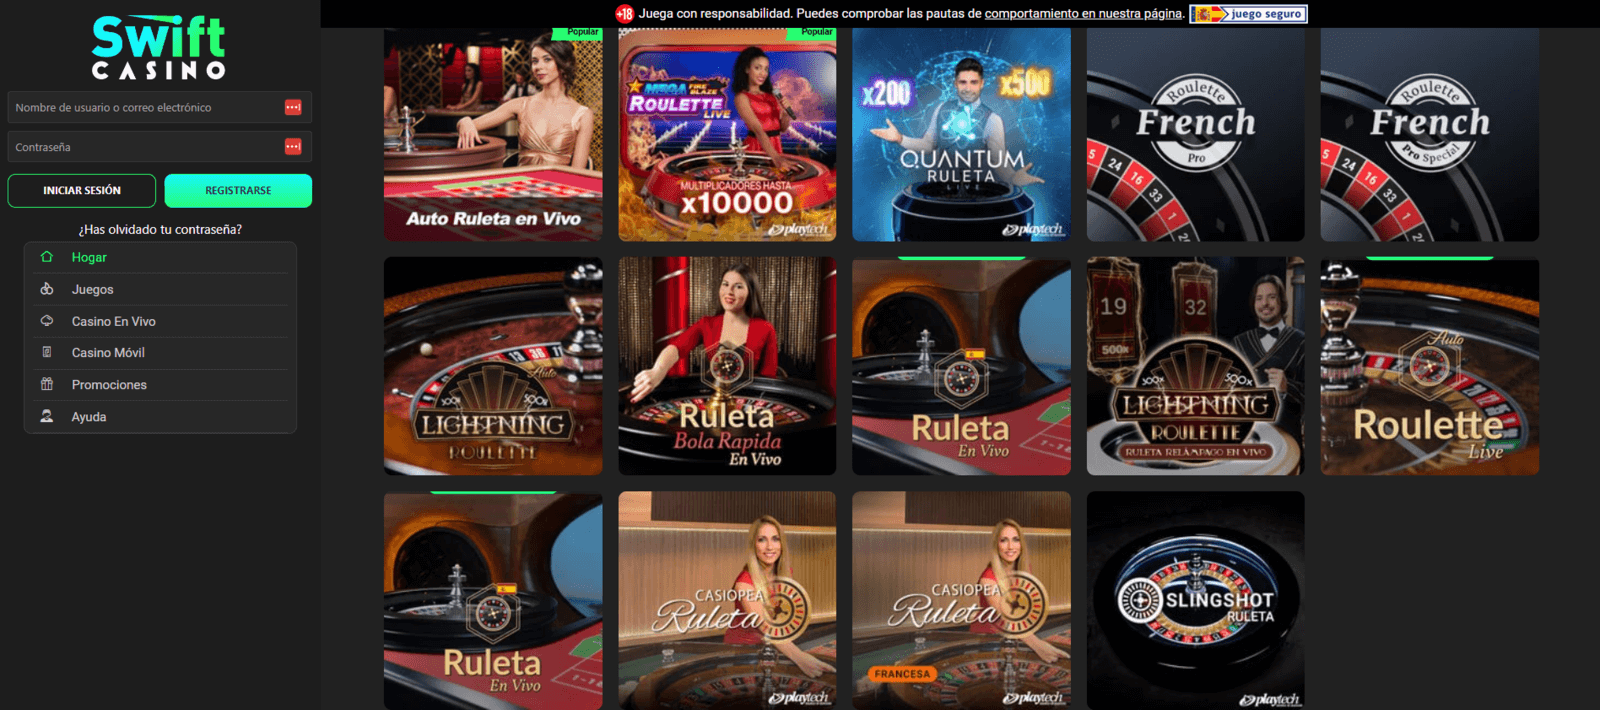 Jugar a la ruleta online de Swift Casino en España